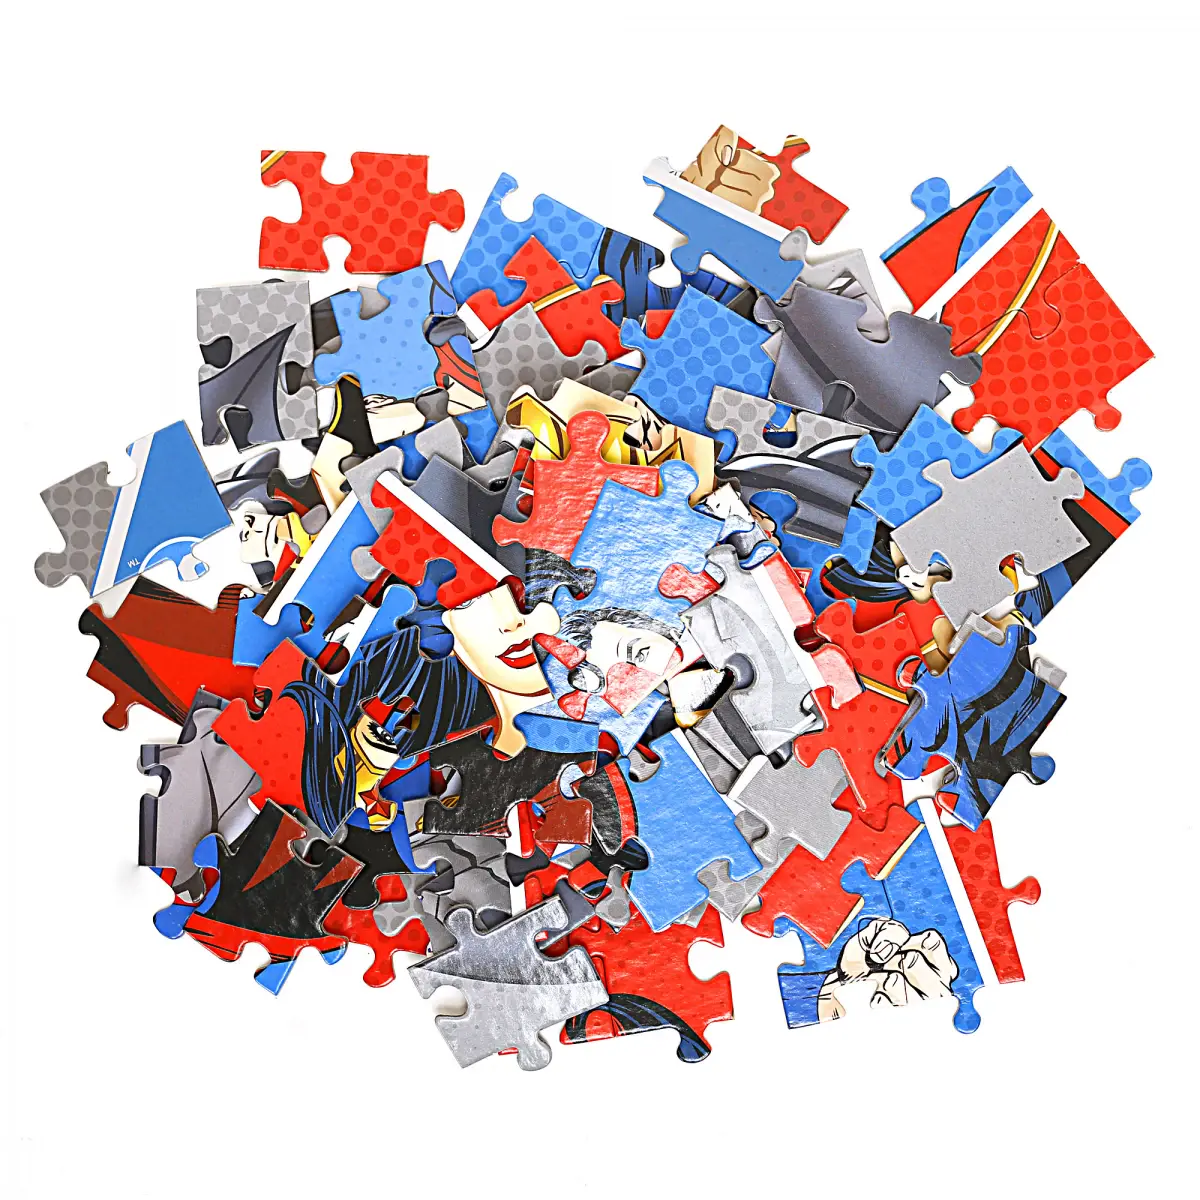 Funskool DC Superhero Puzzle, 104PCs, 4Y+, Multicolour